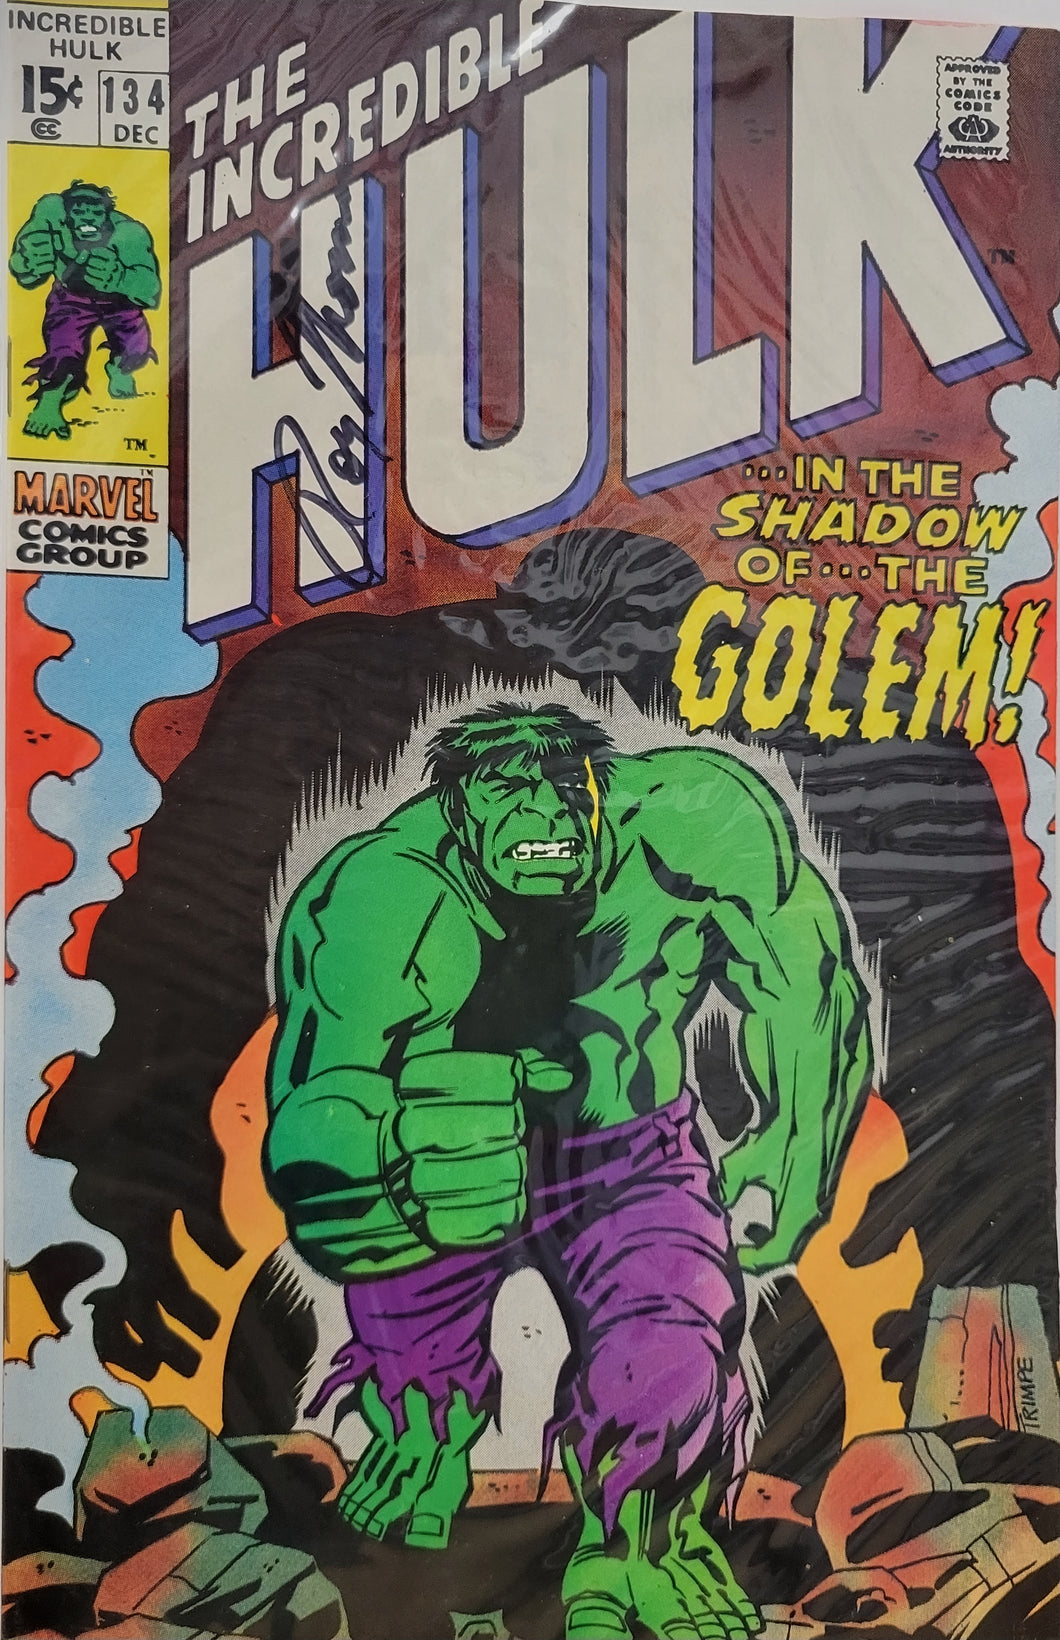 Incredible Hulk #134 Signed by Roy Thomas w/COA